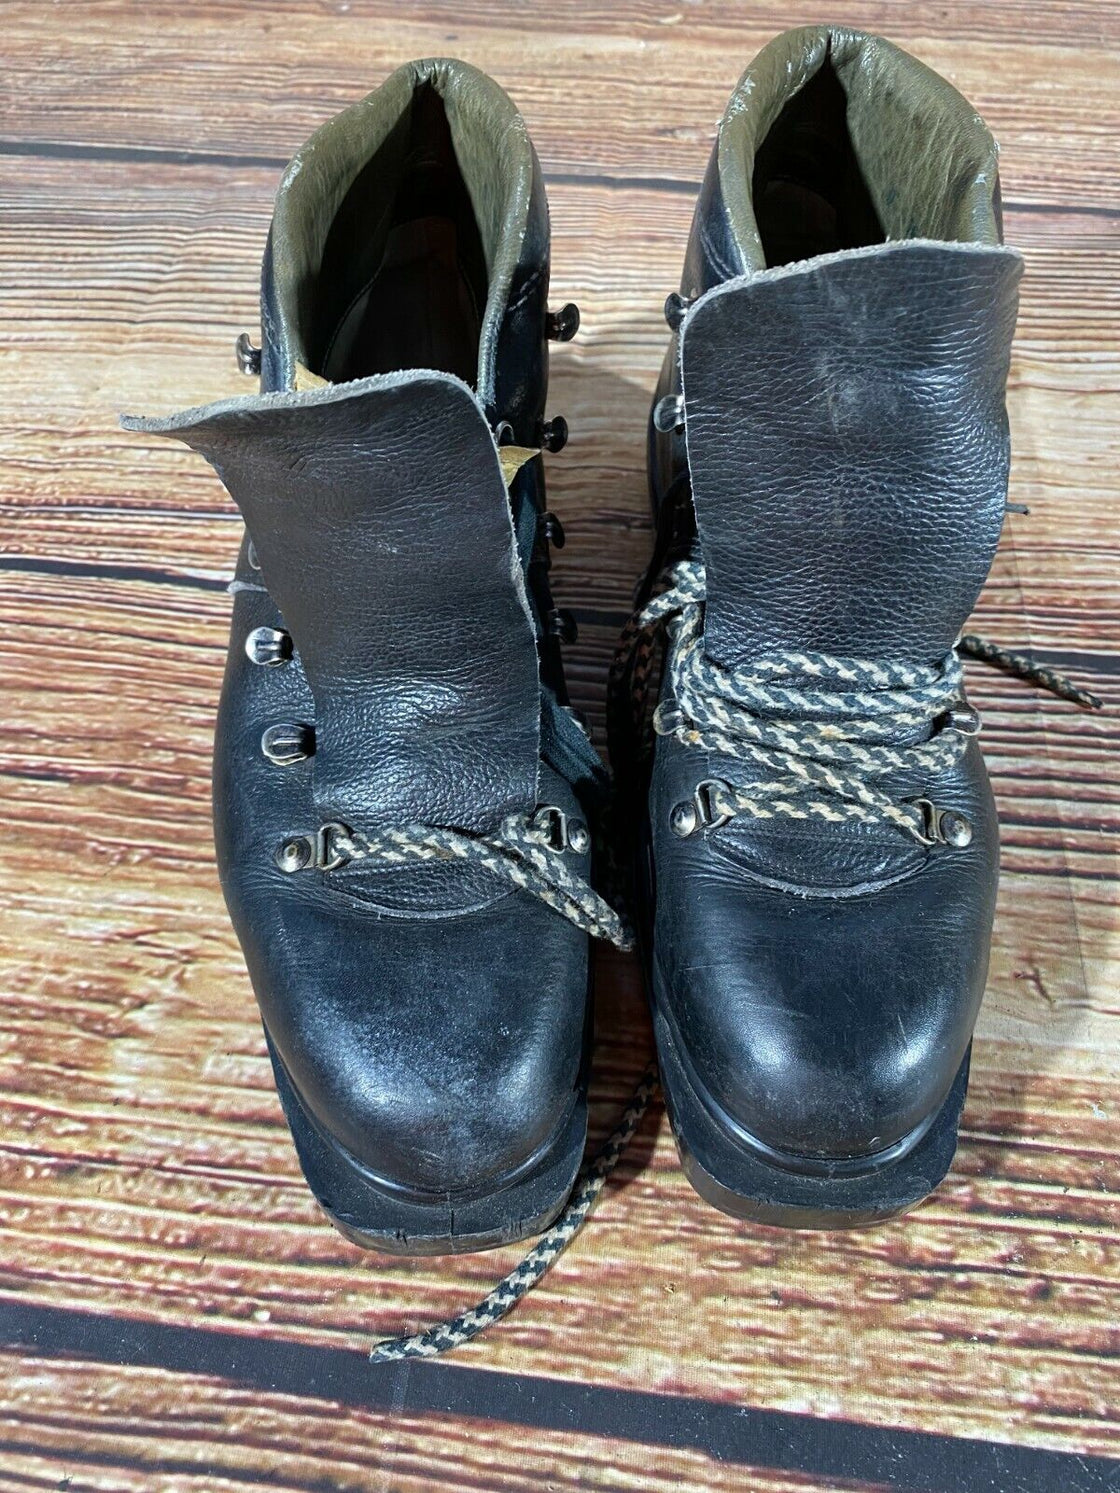 KRISTIANIA Vintage Alpine Ski Boots EU44 US9.5 UK9 Mondo 278 for Cable Bindings